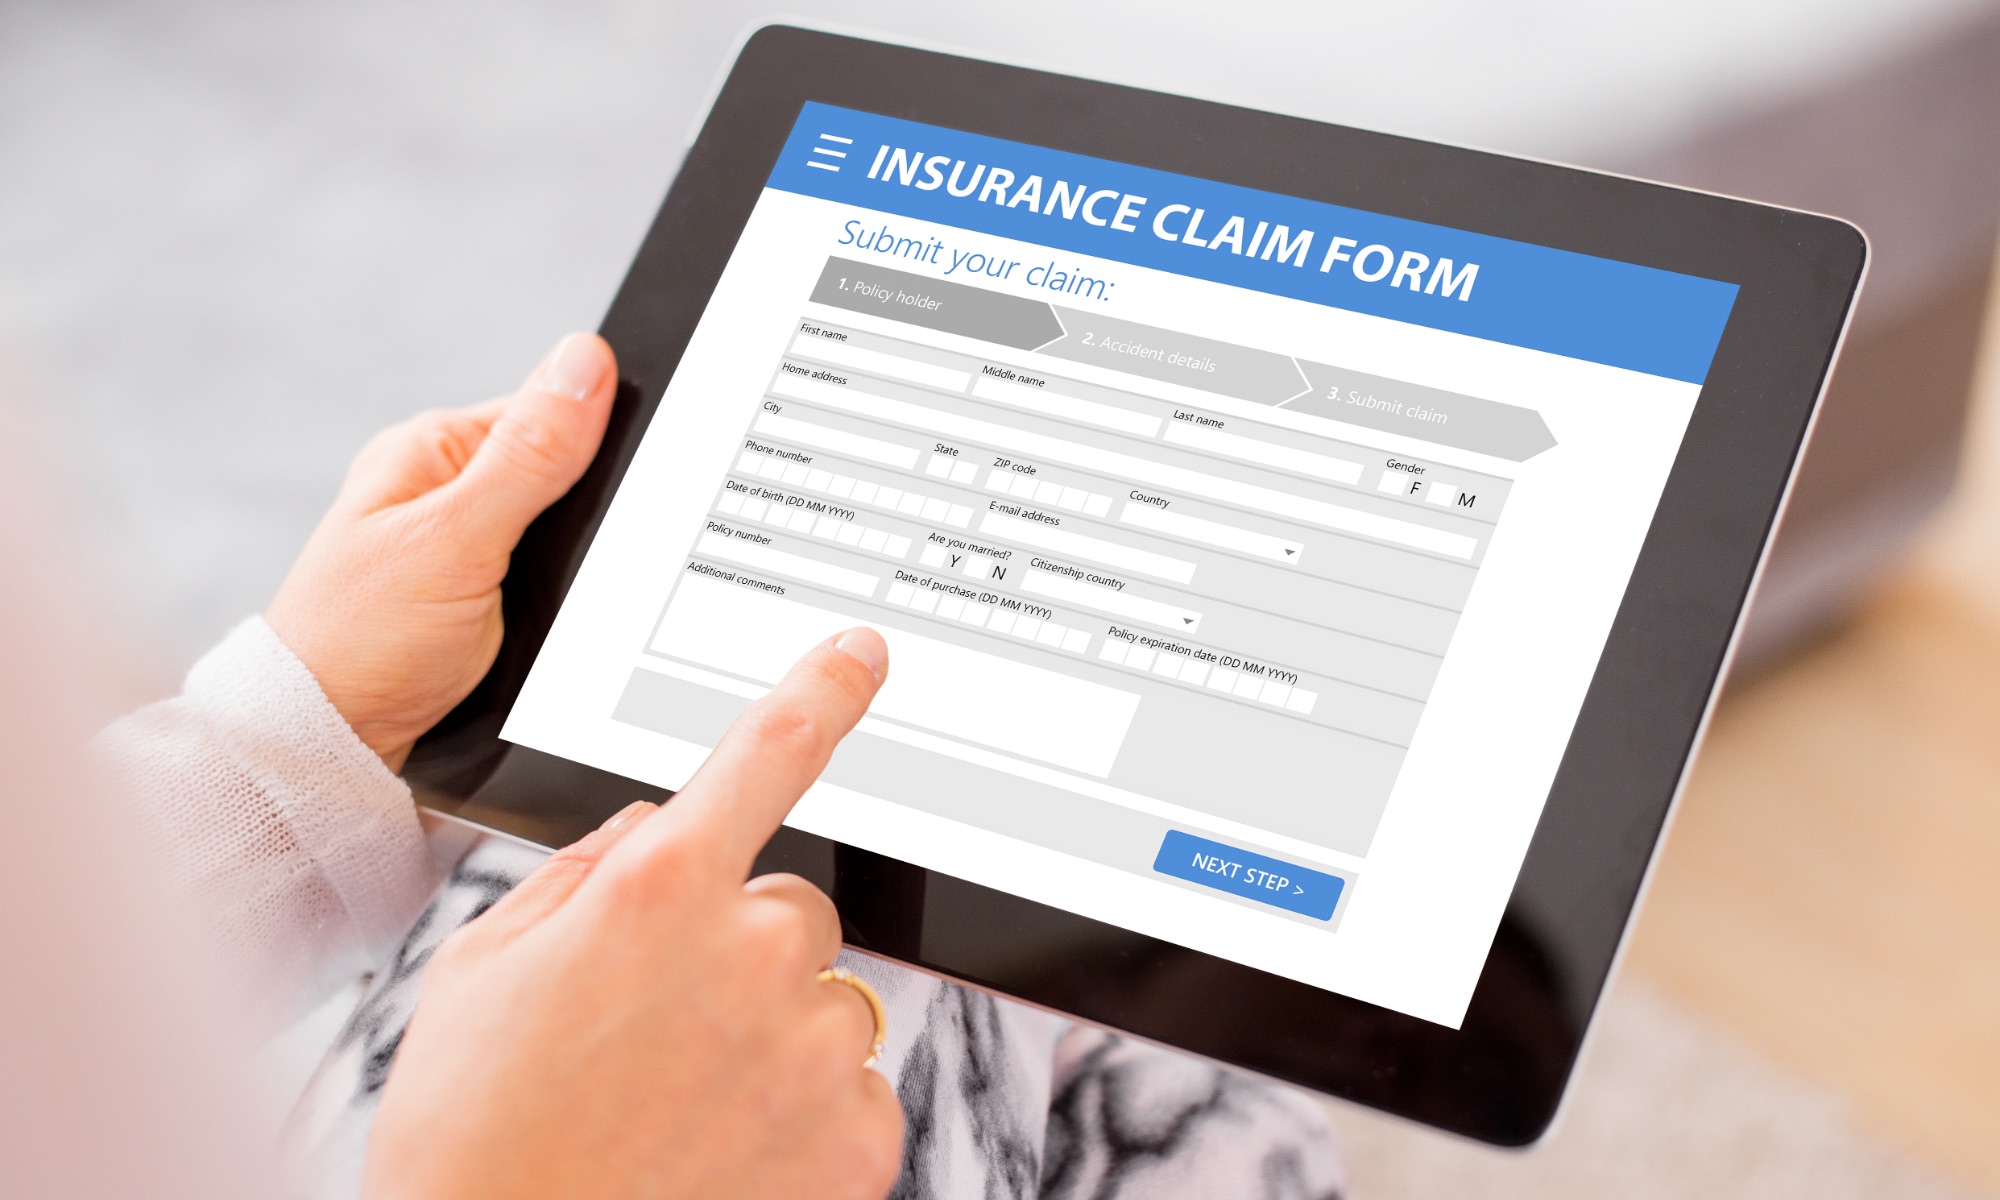 Insurance Claim Form on Tablet